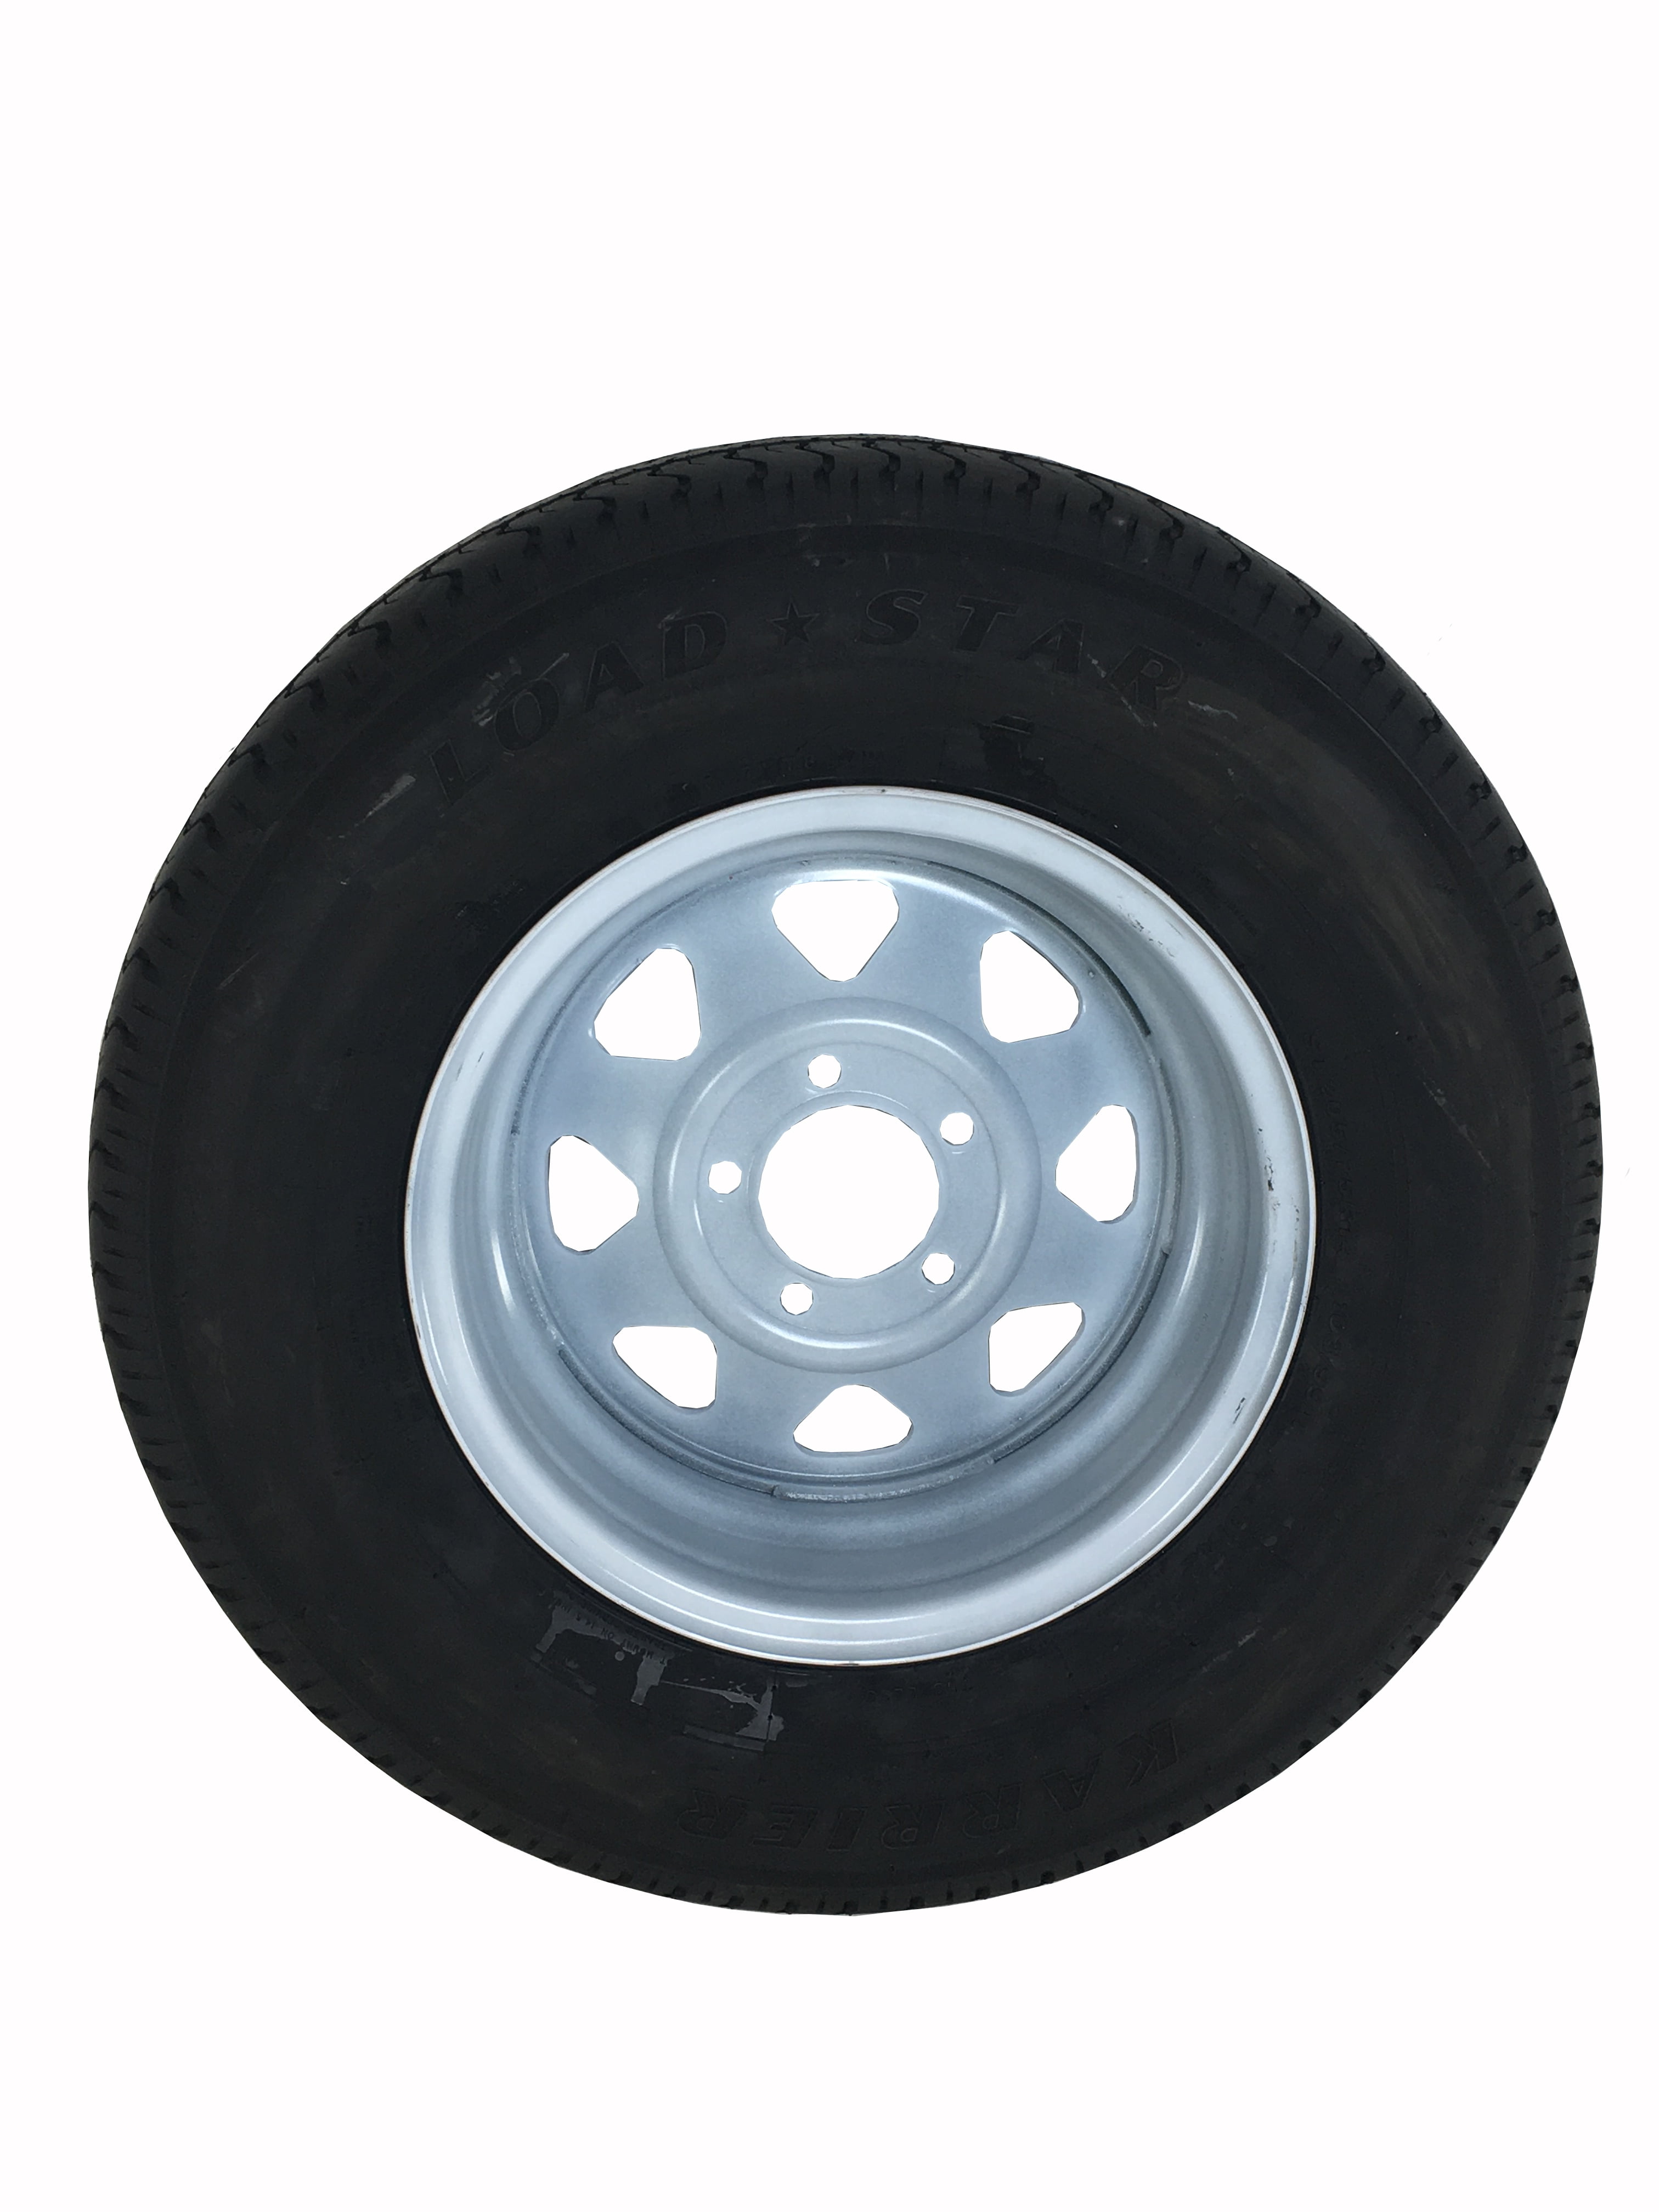 *4* Kenda K558 ST175/80D13 Bias Trailer Tires & Wheels Black Mod 5-4.5 LRC 